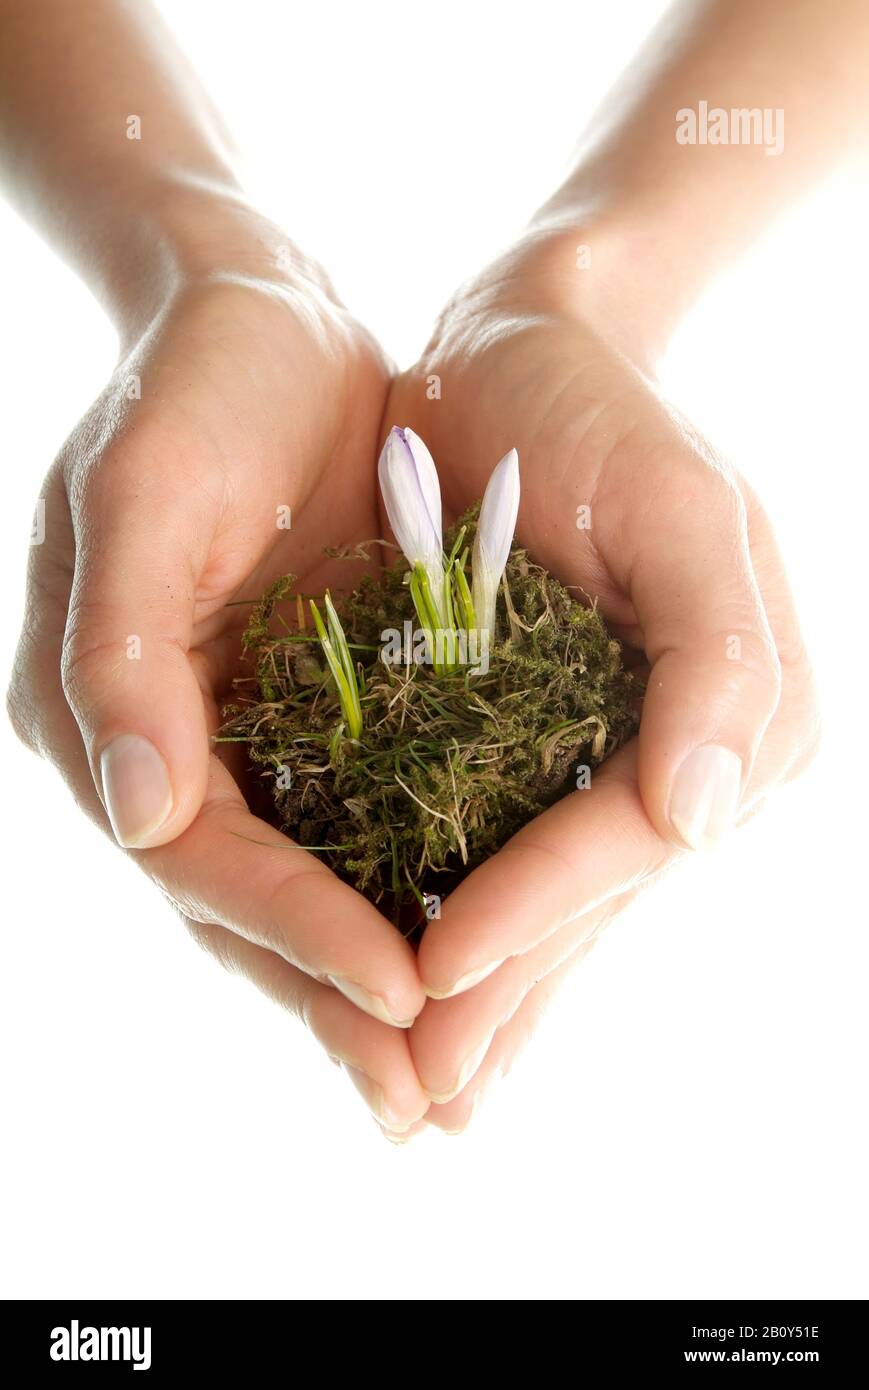 Hand with crocus flower Stock Photo